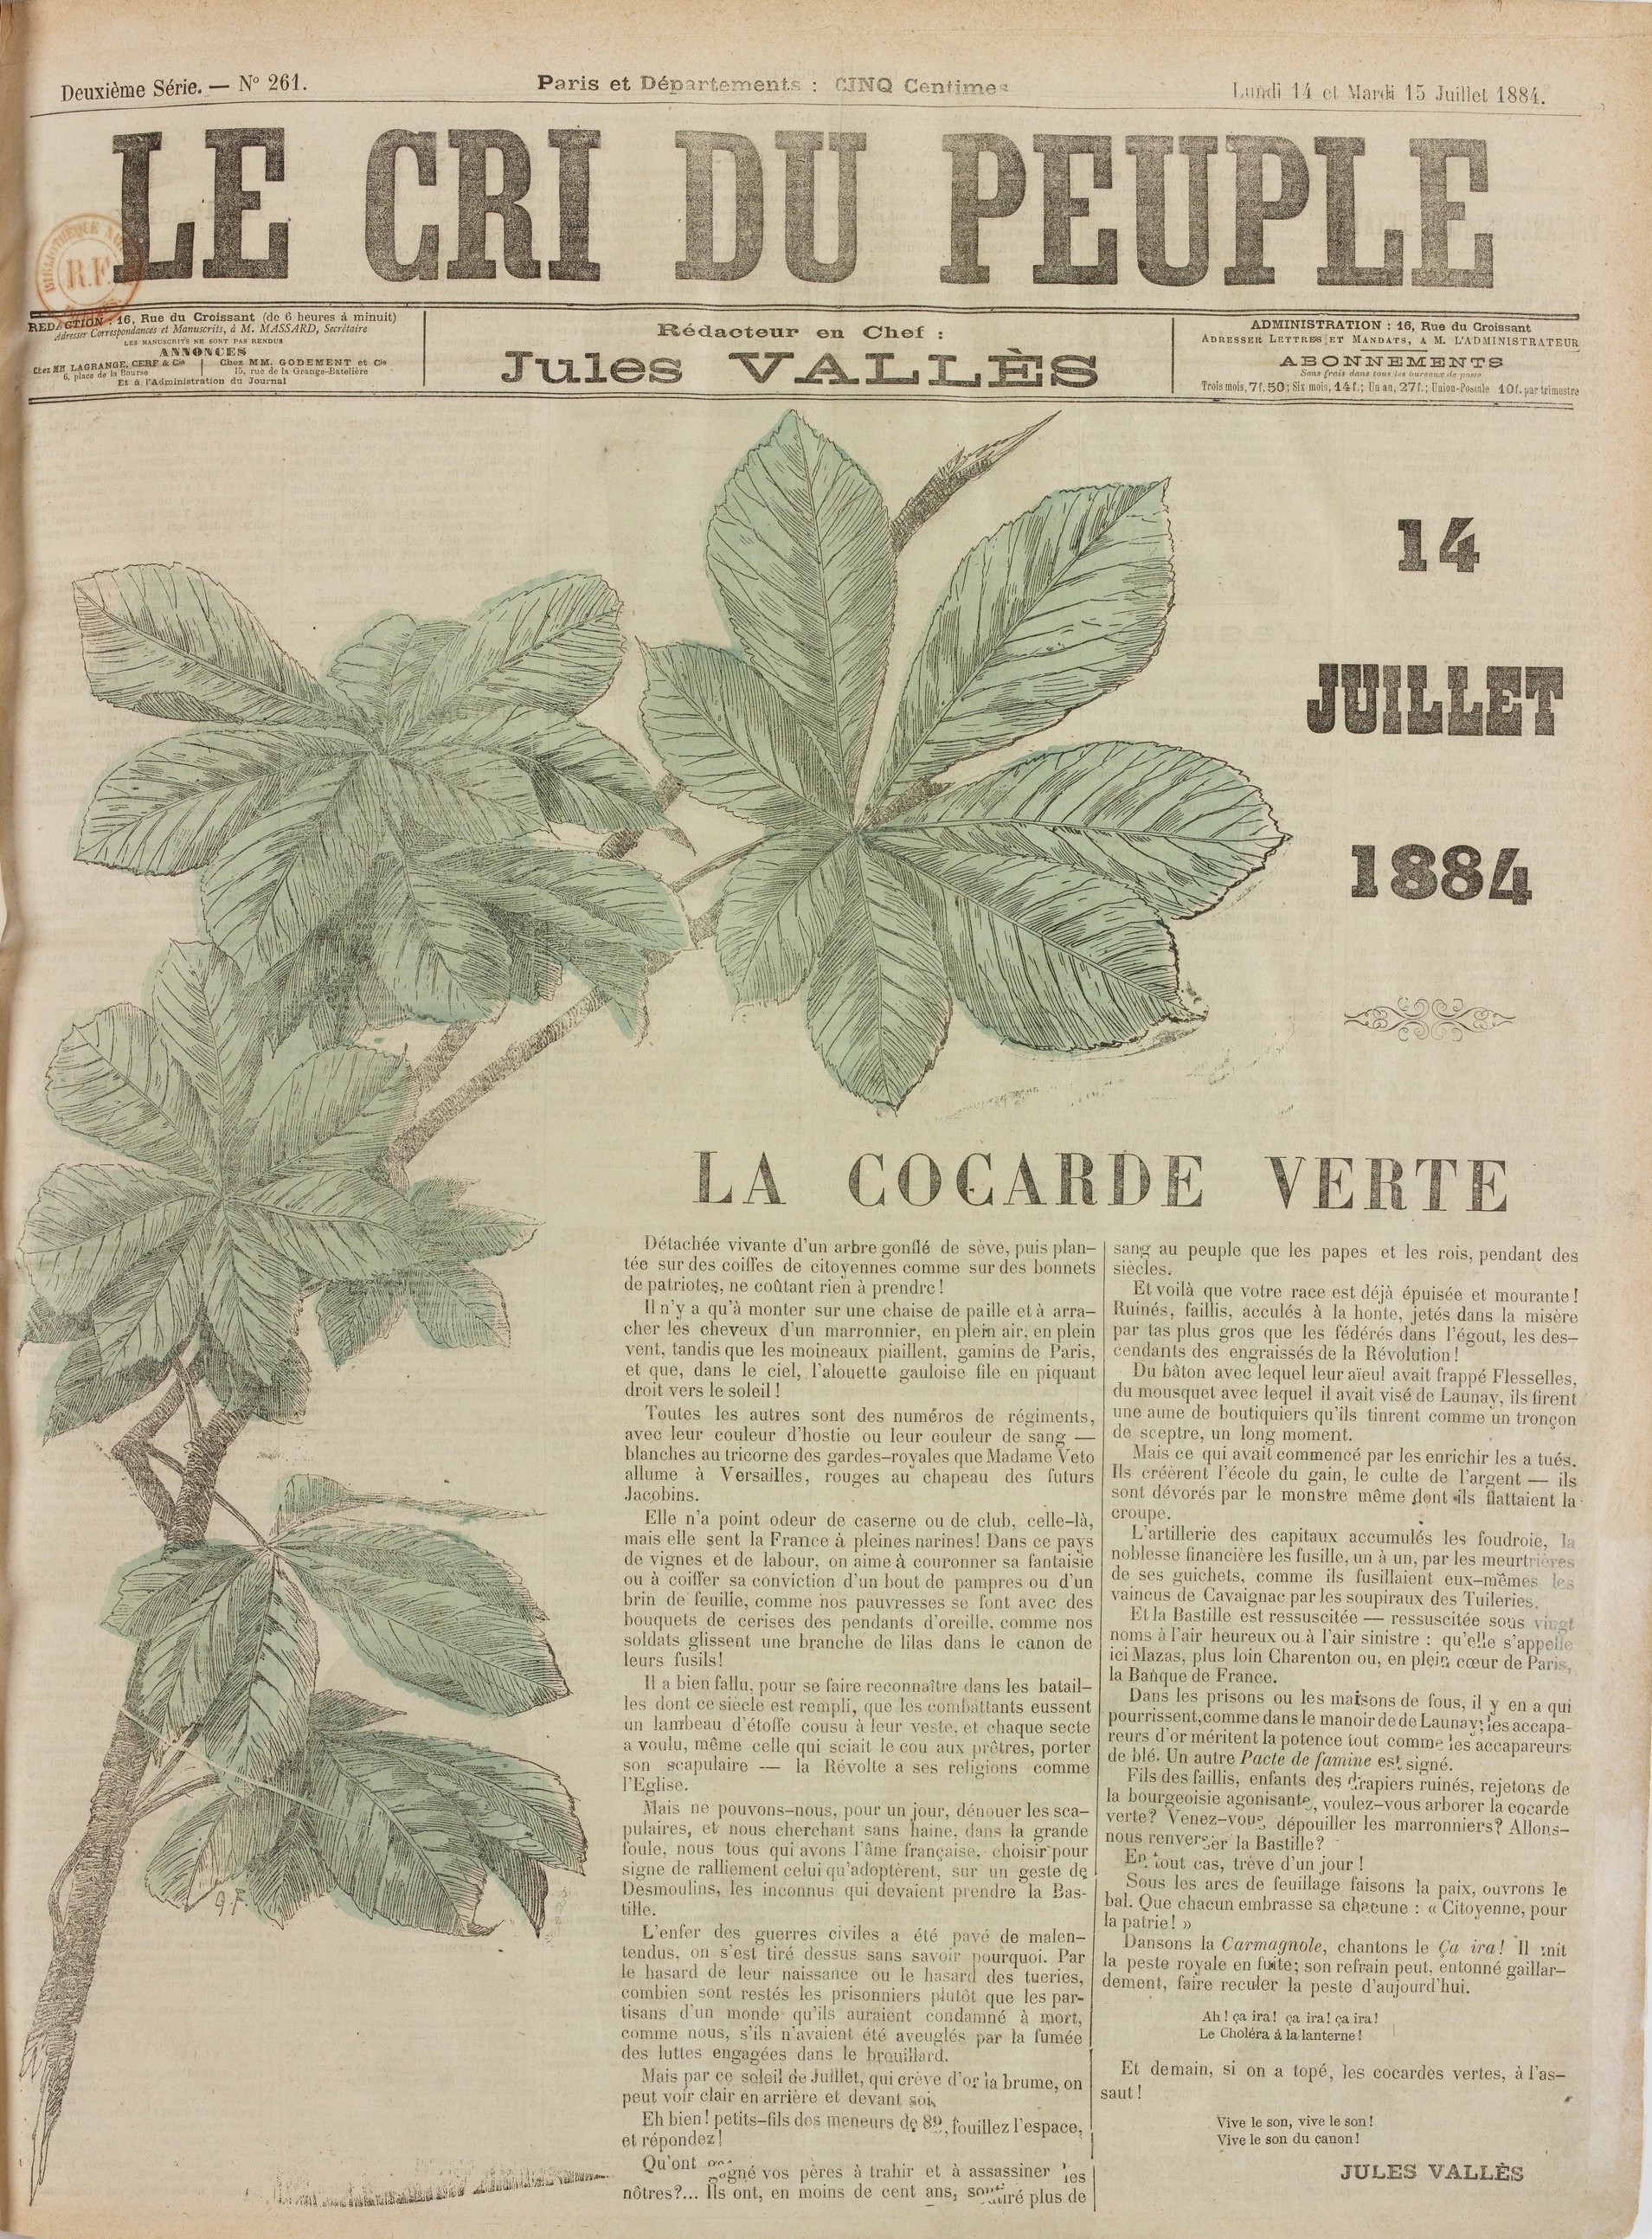 "Le Cri du Peuple" de Jules Vallès 14 juillet1884 (Source : https://gallica.bnf.fr/ark:/12148/bpt6k4682490v)